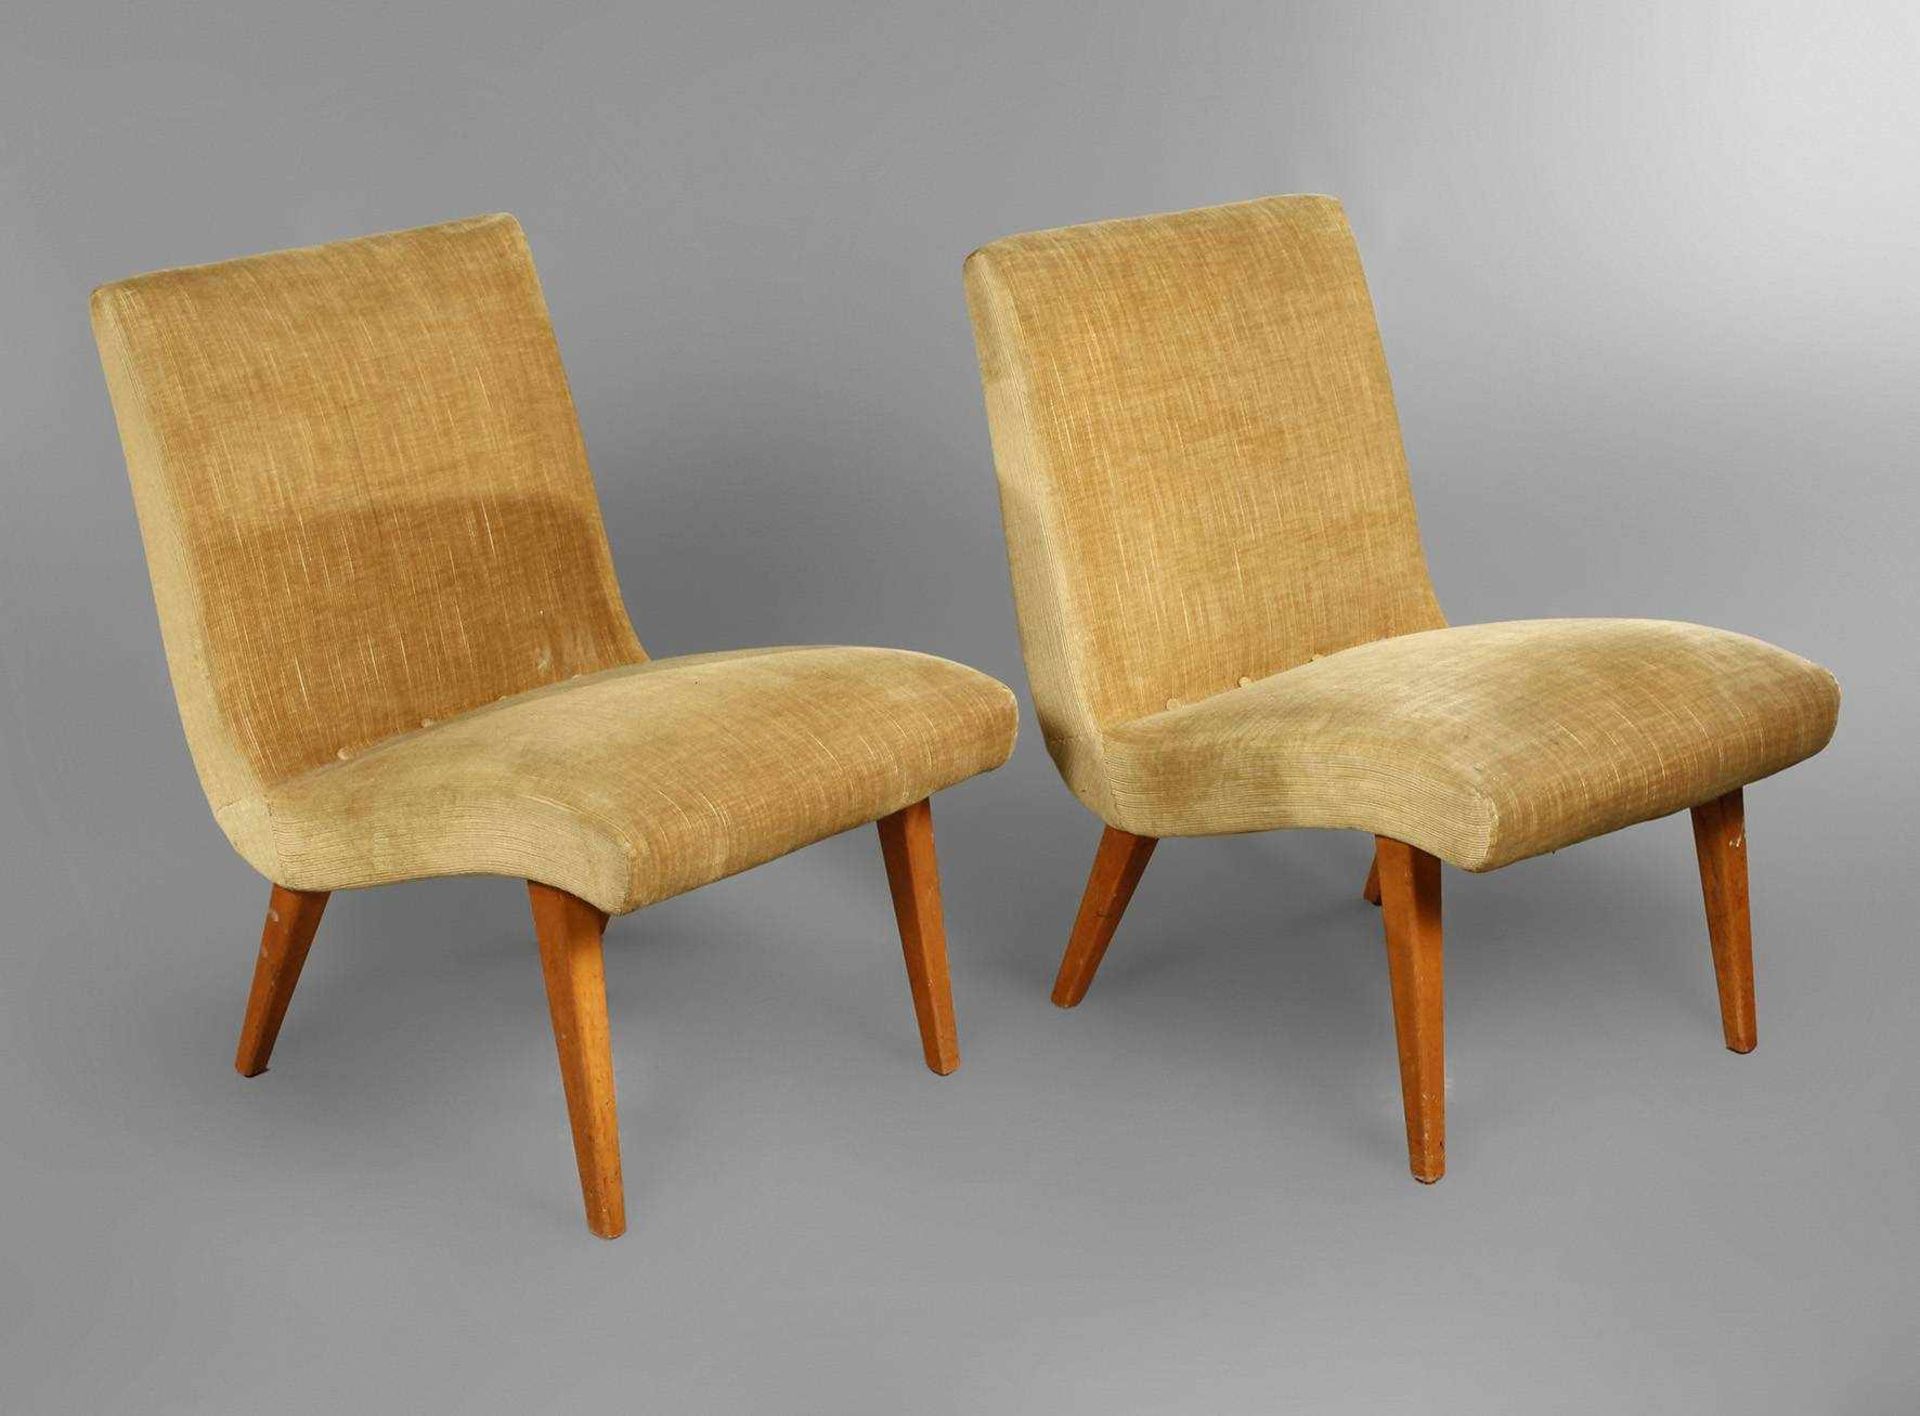 Zwei Sessel Modell "Vostra"Entwurf Jens Risom, Hersteller: Knoll, ca. 1949, Gestell aus Buche